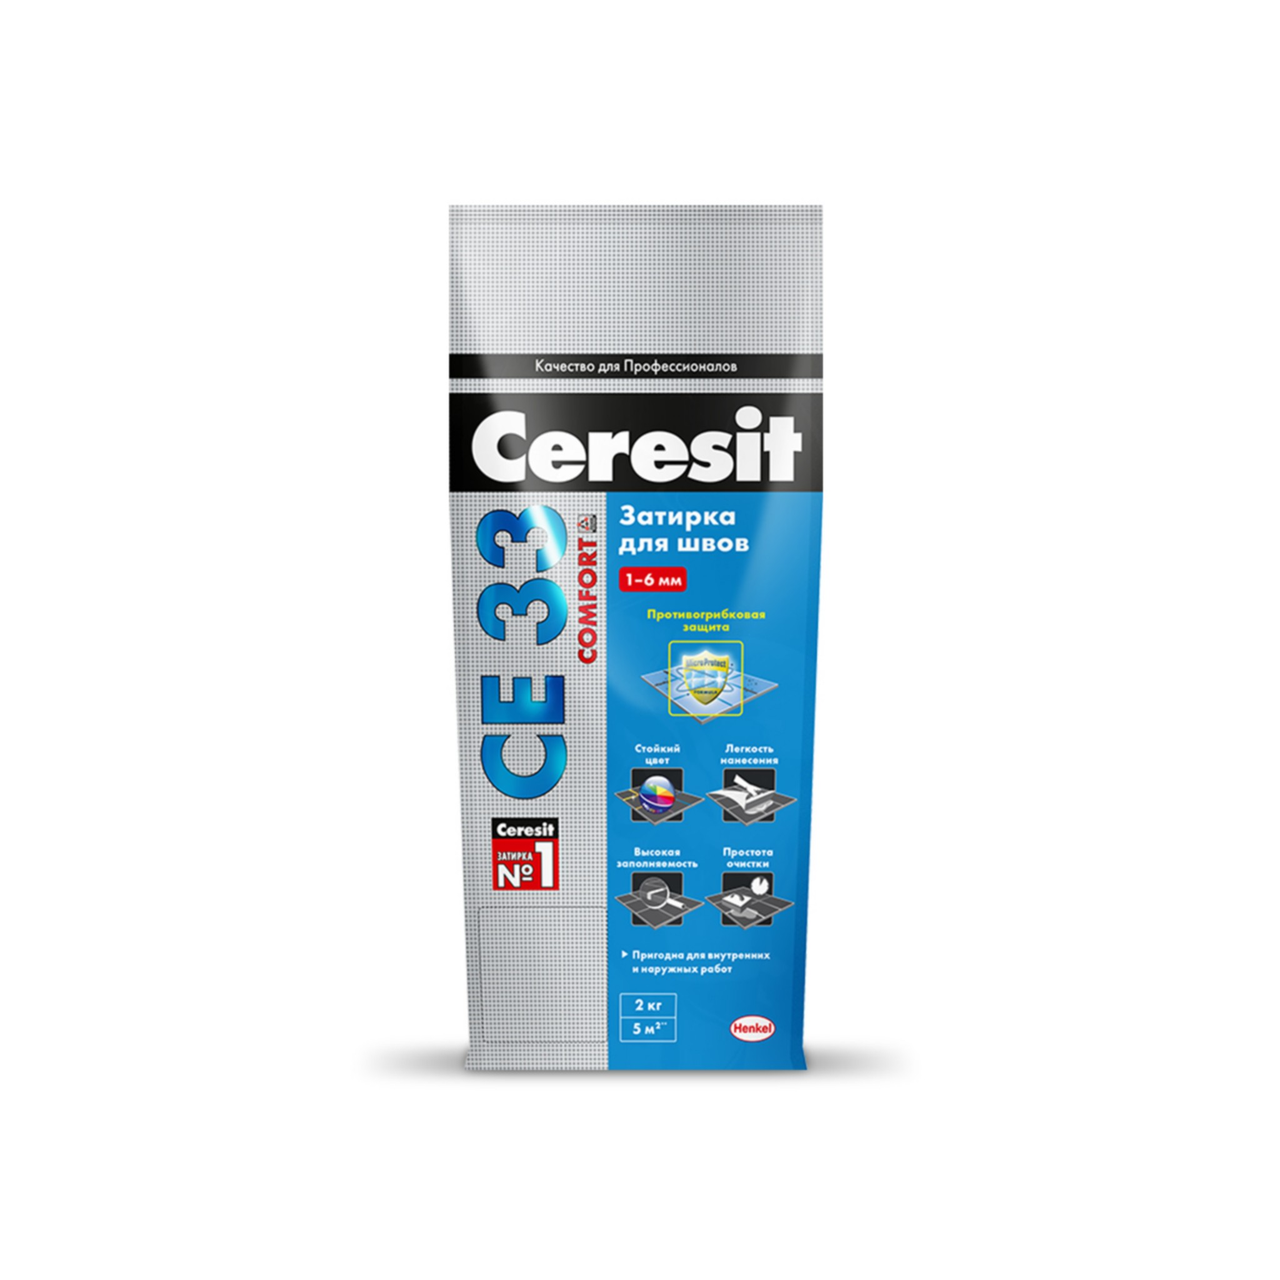 Ceresit  CE 33 Comfort затирка для узких швов, цвет: Графит (Graphite), 2 кг